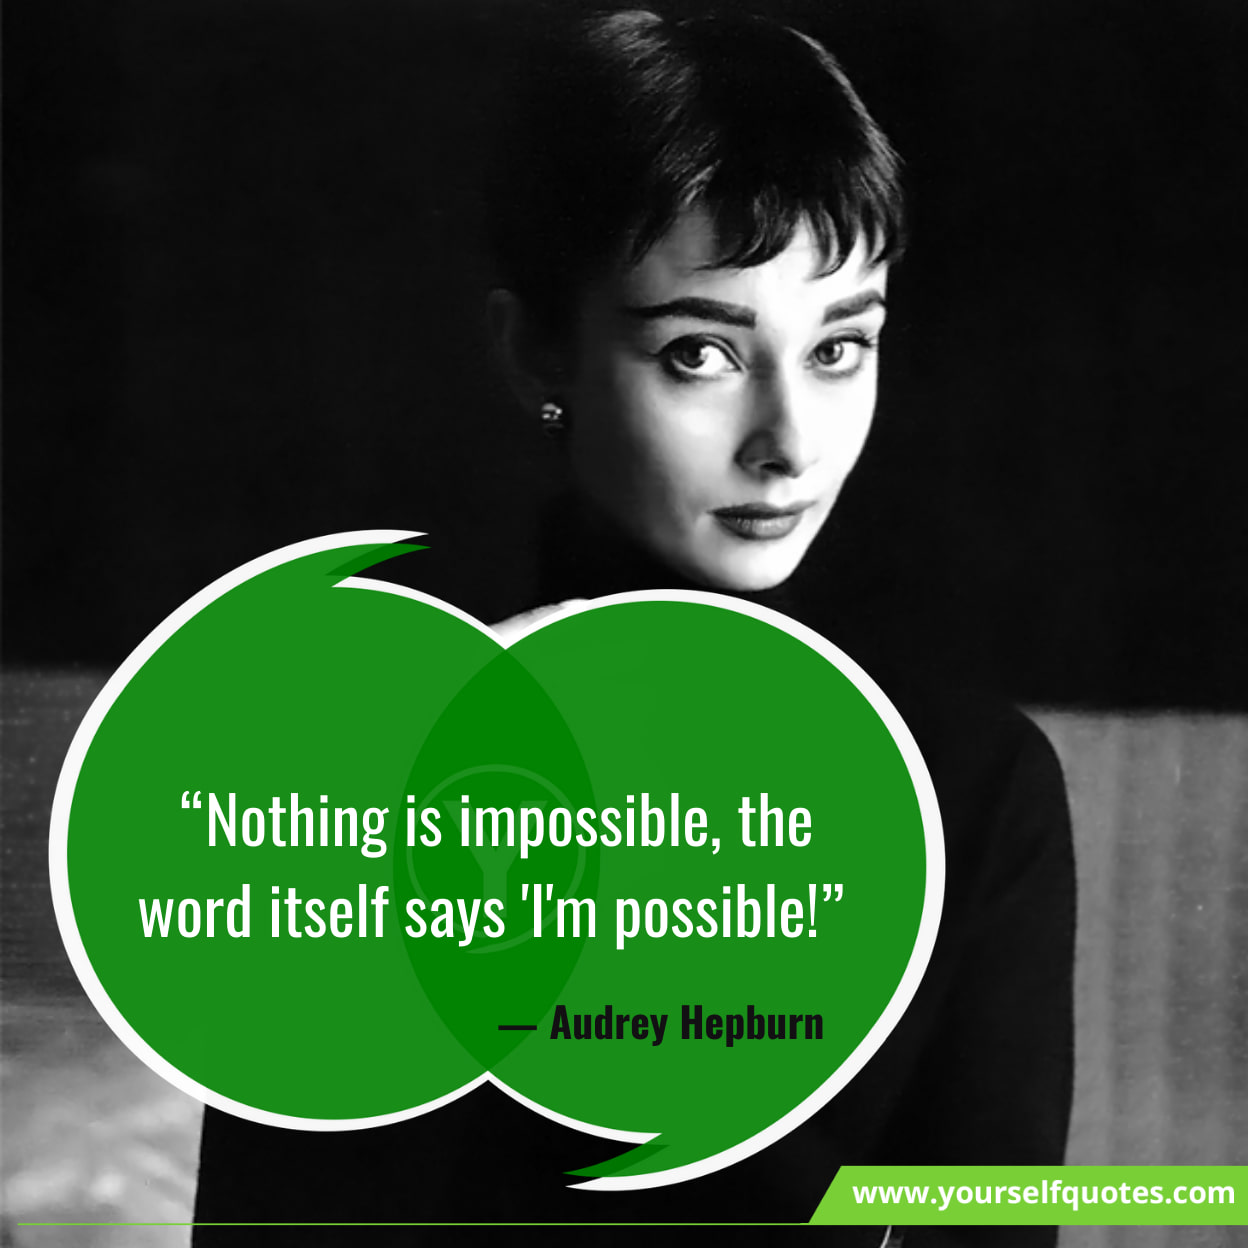 Motivational Quotes of Audrey Hepburn